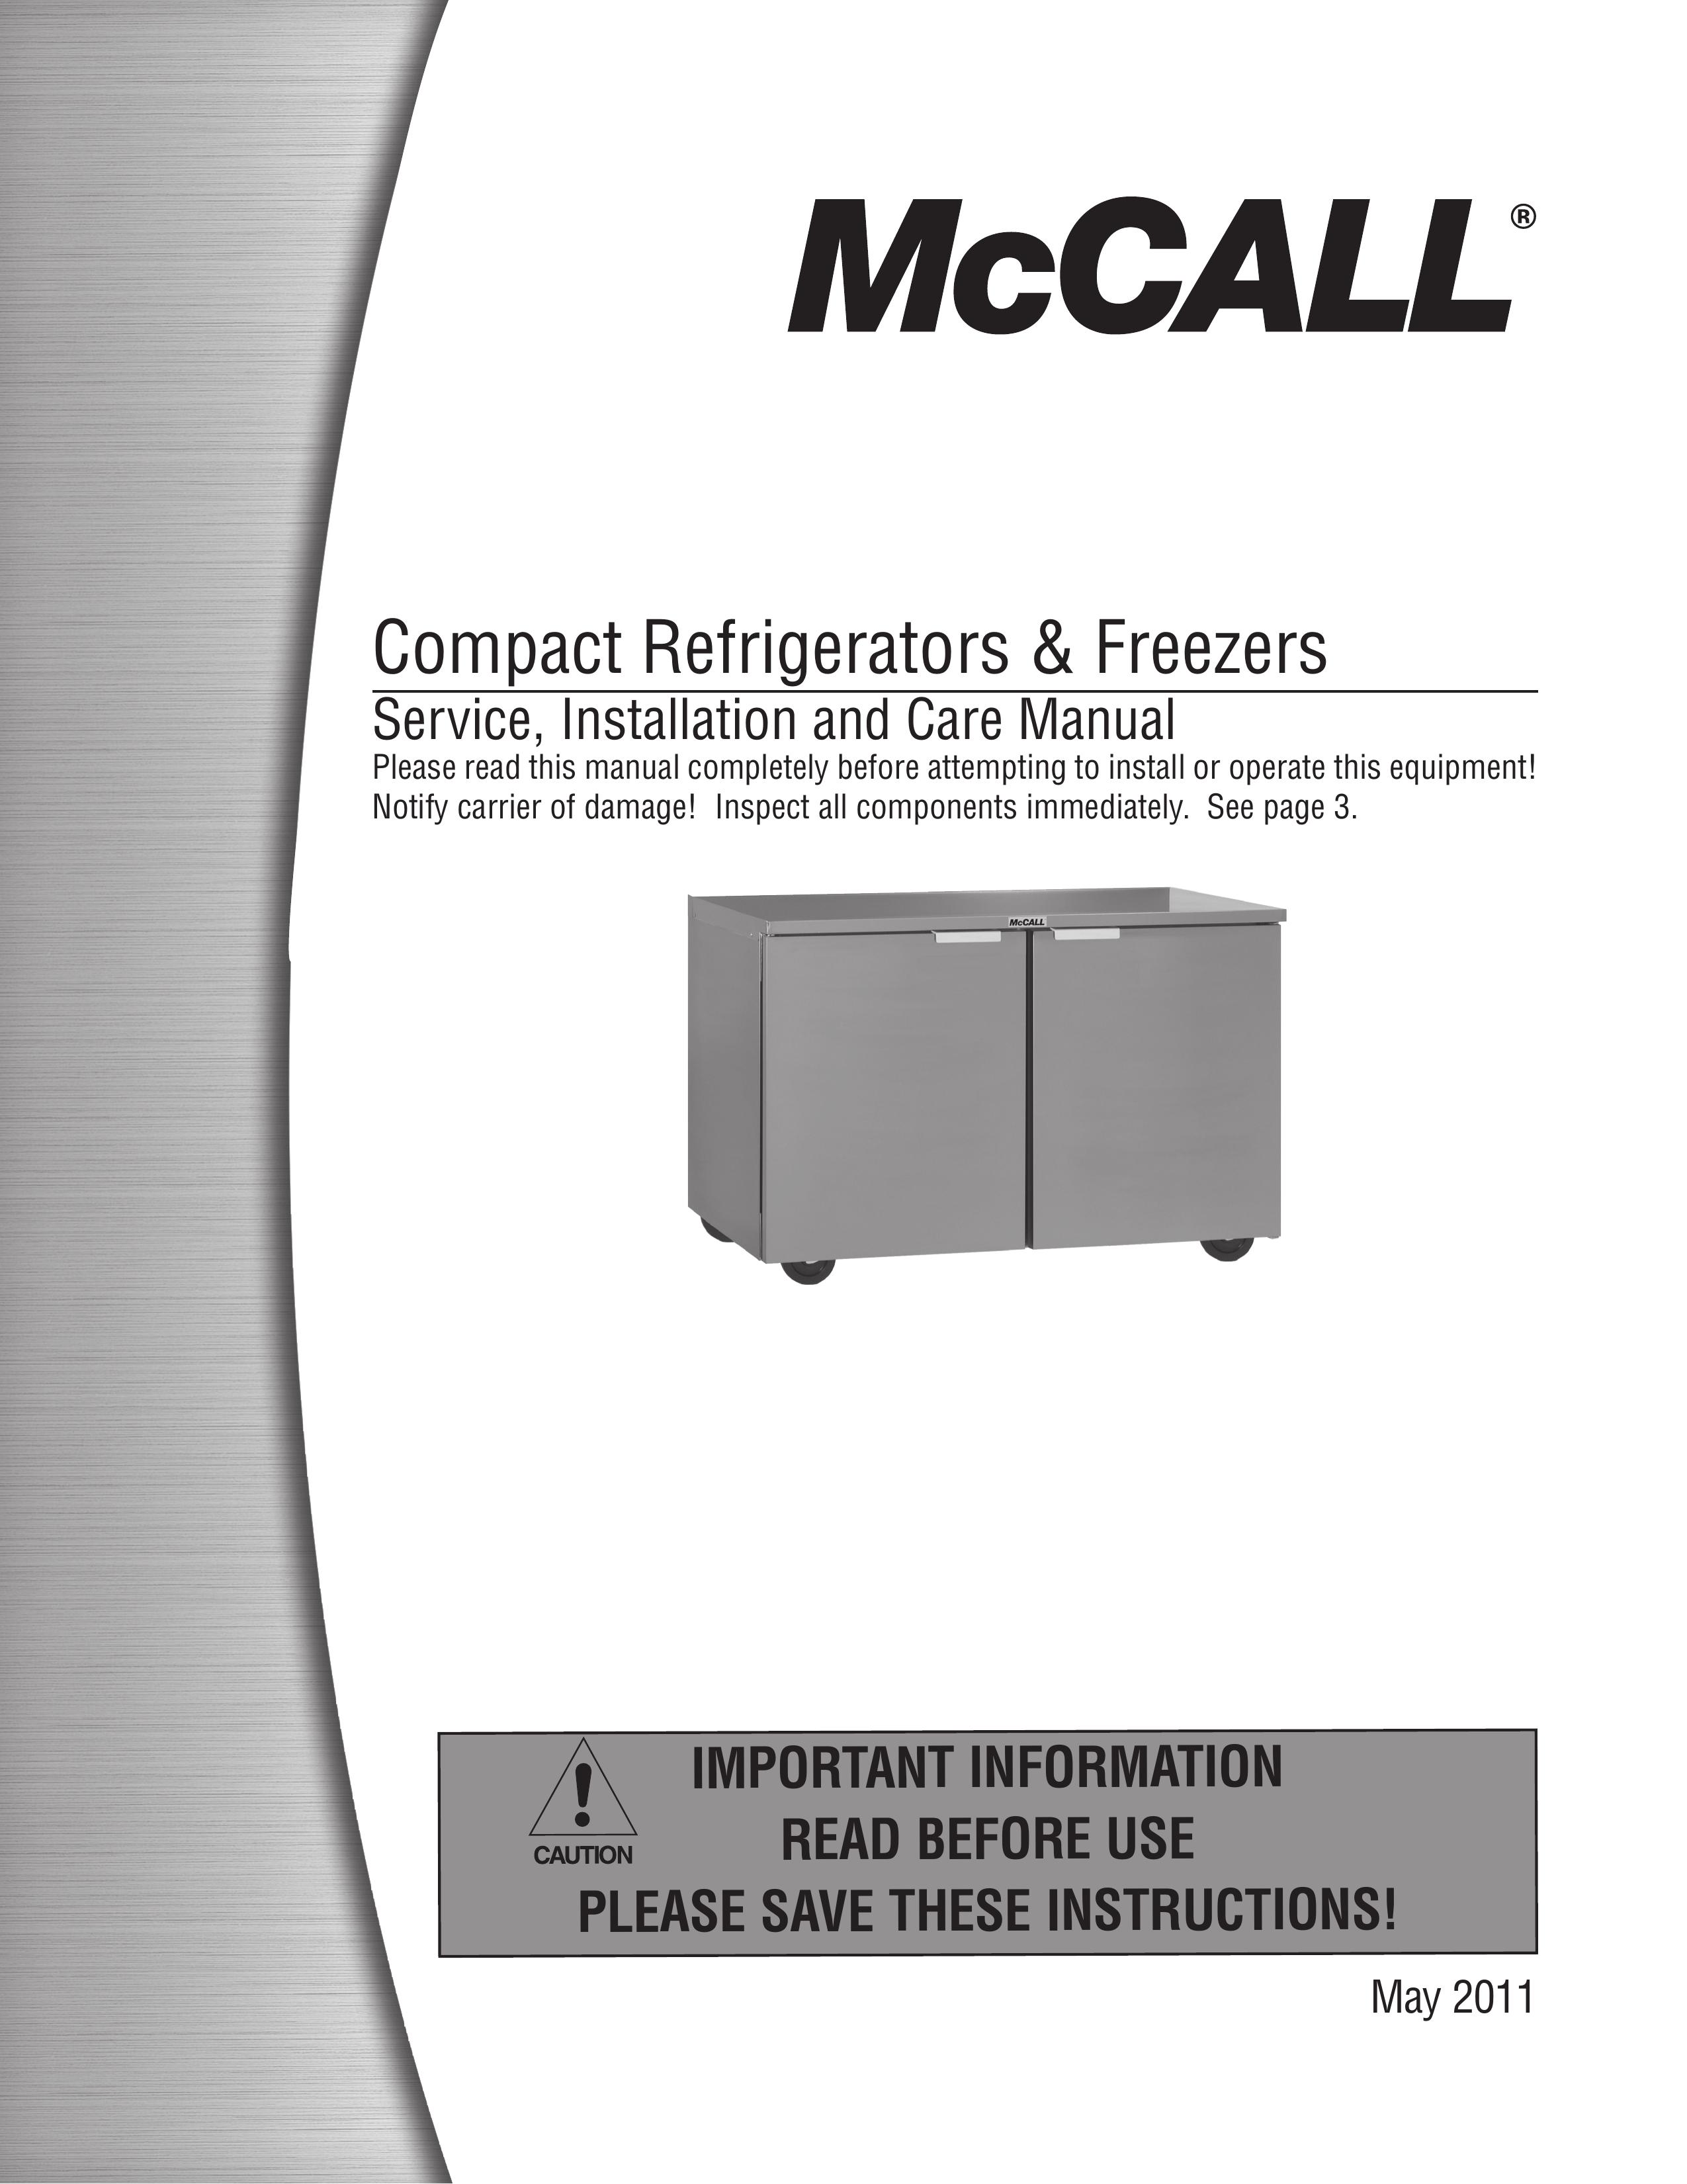 McCall Refrigeration MCCF48 Refrigerator User Manual